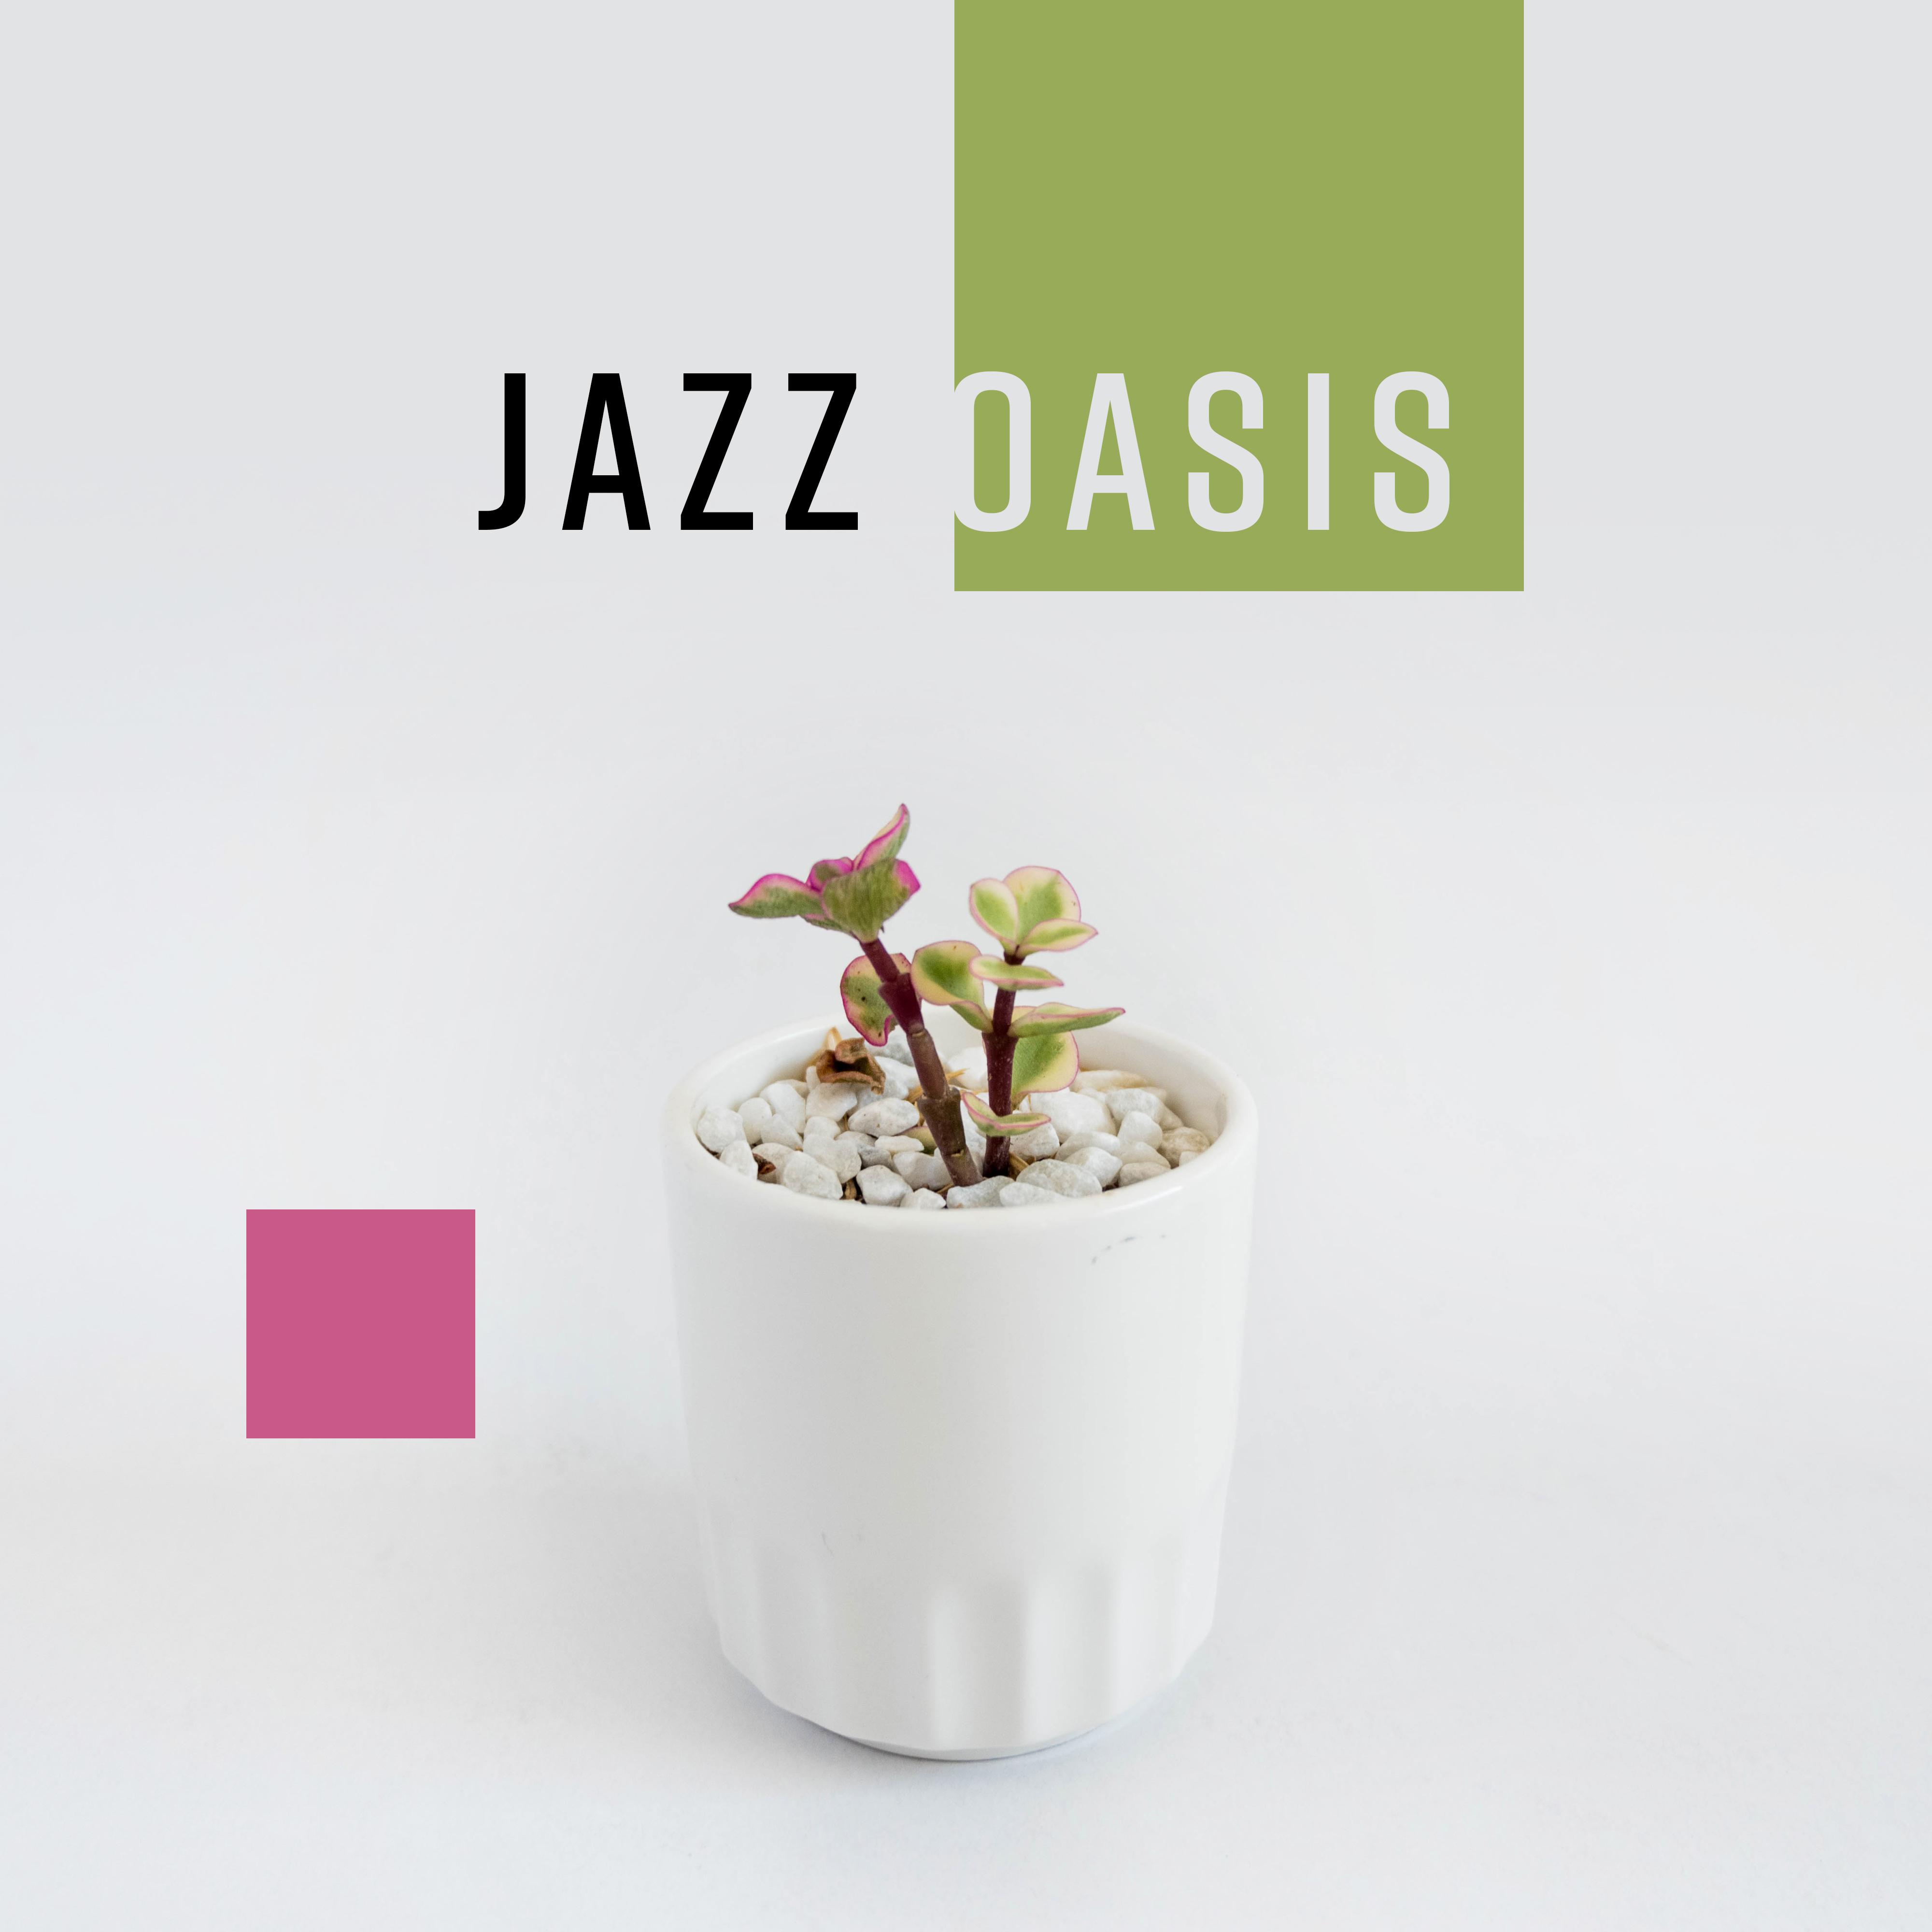 Jazz Oasis